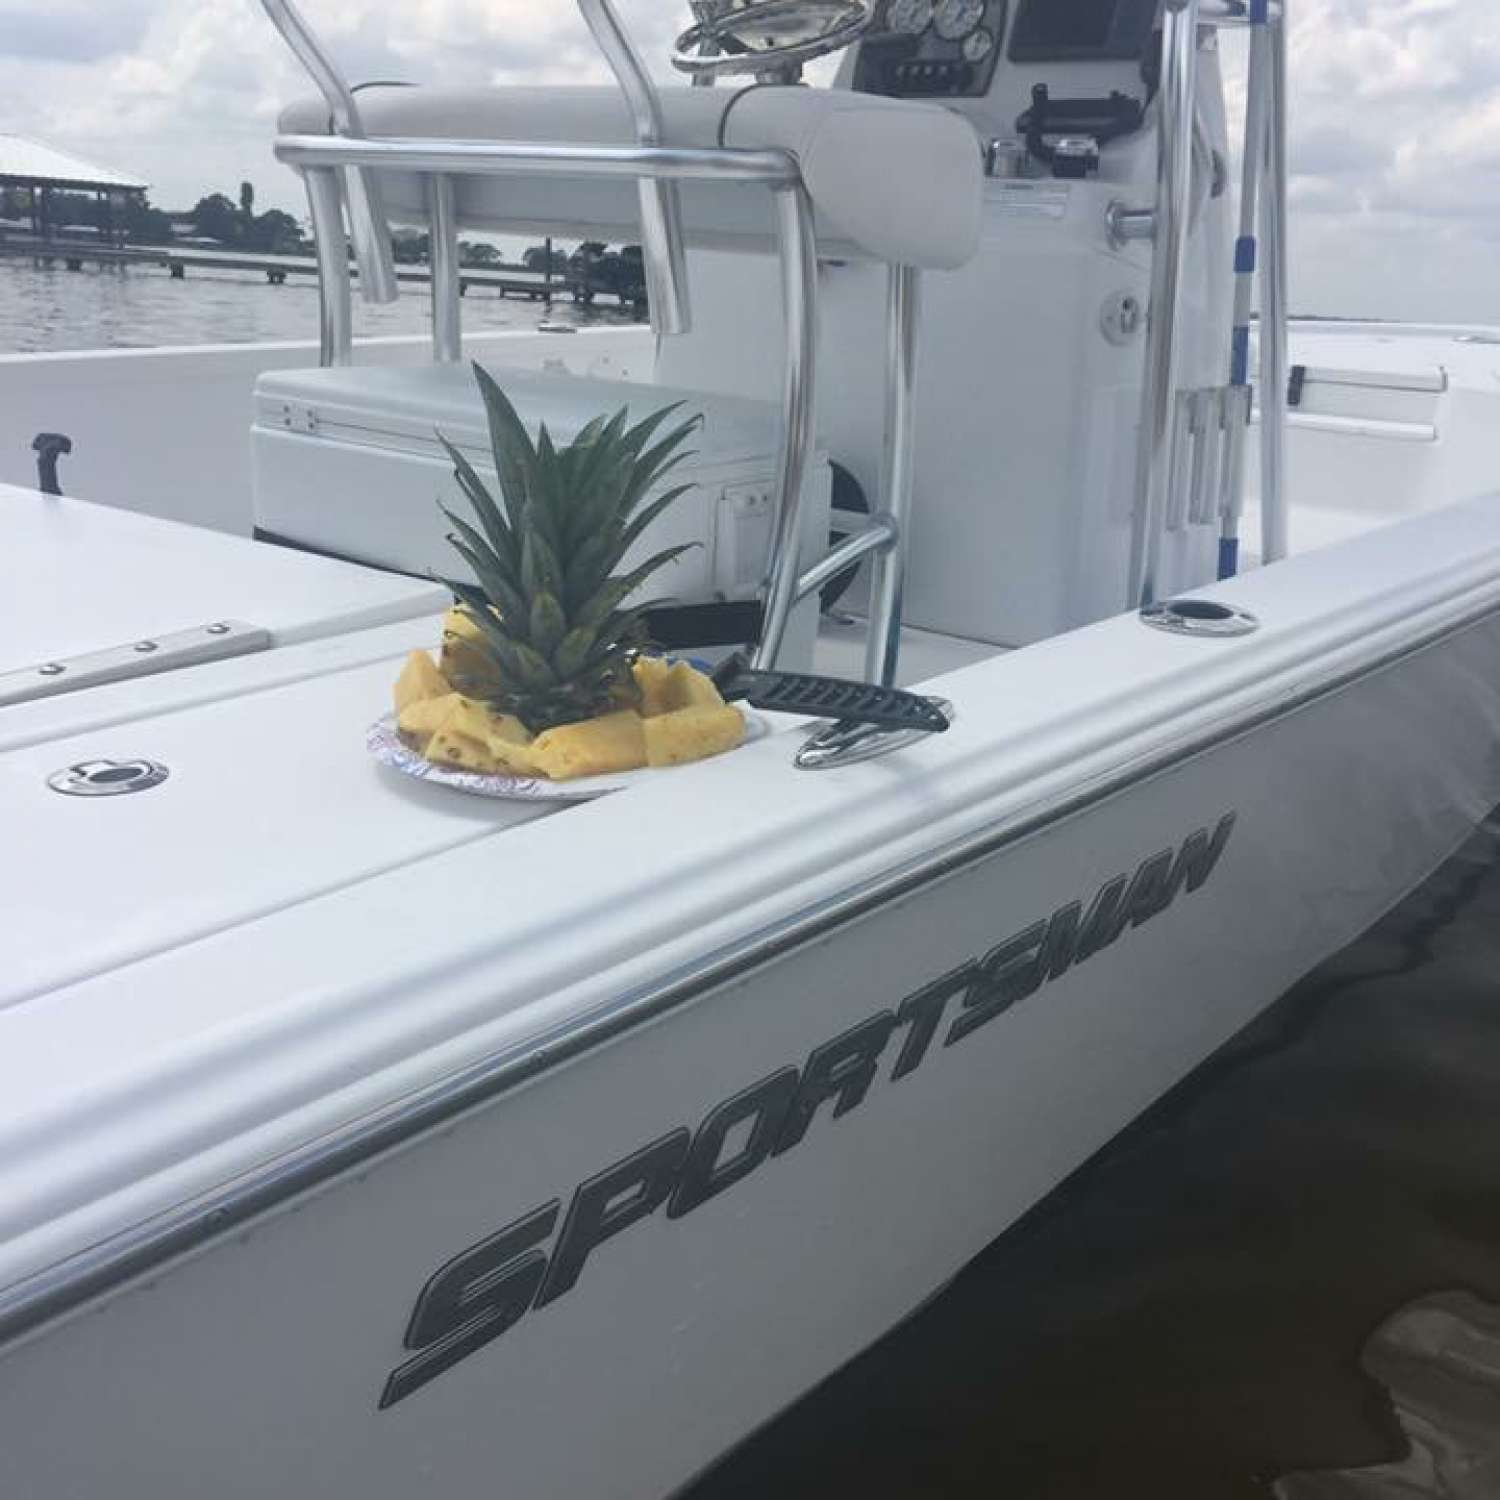 My photo was taken on Lake Placid in Lake Placid, FL over spring break.  My Sportsman bay boat...